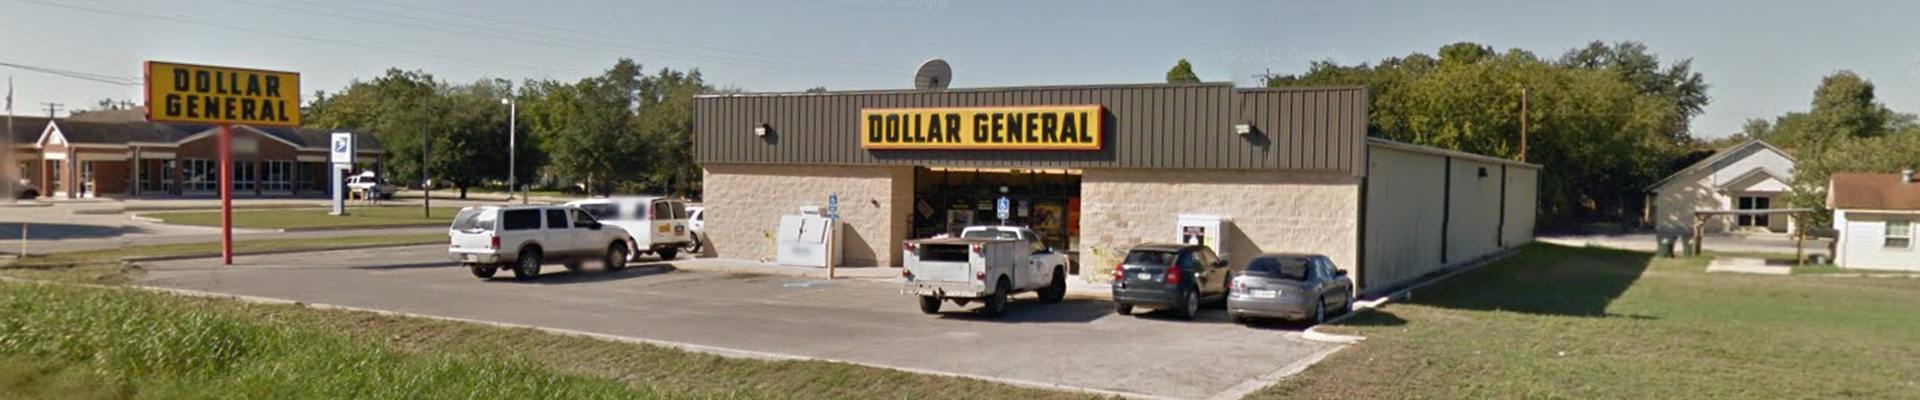 Dollar General (7426) – Stockdale, Texas